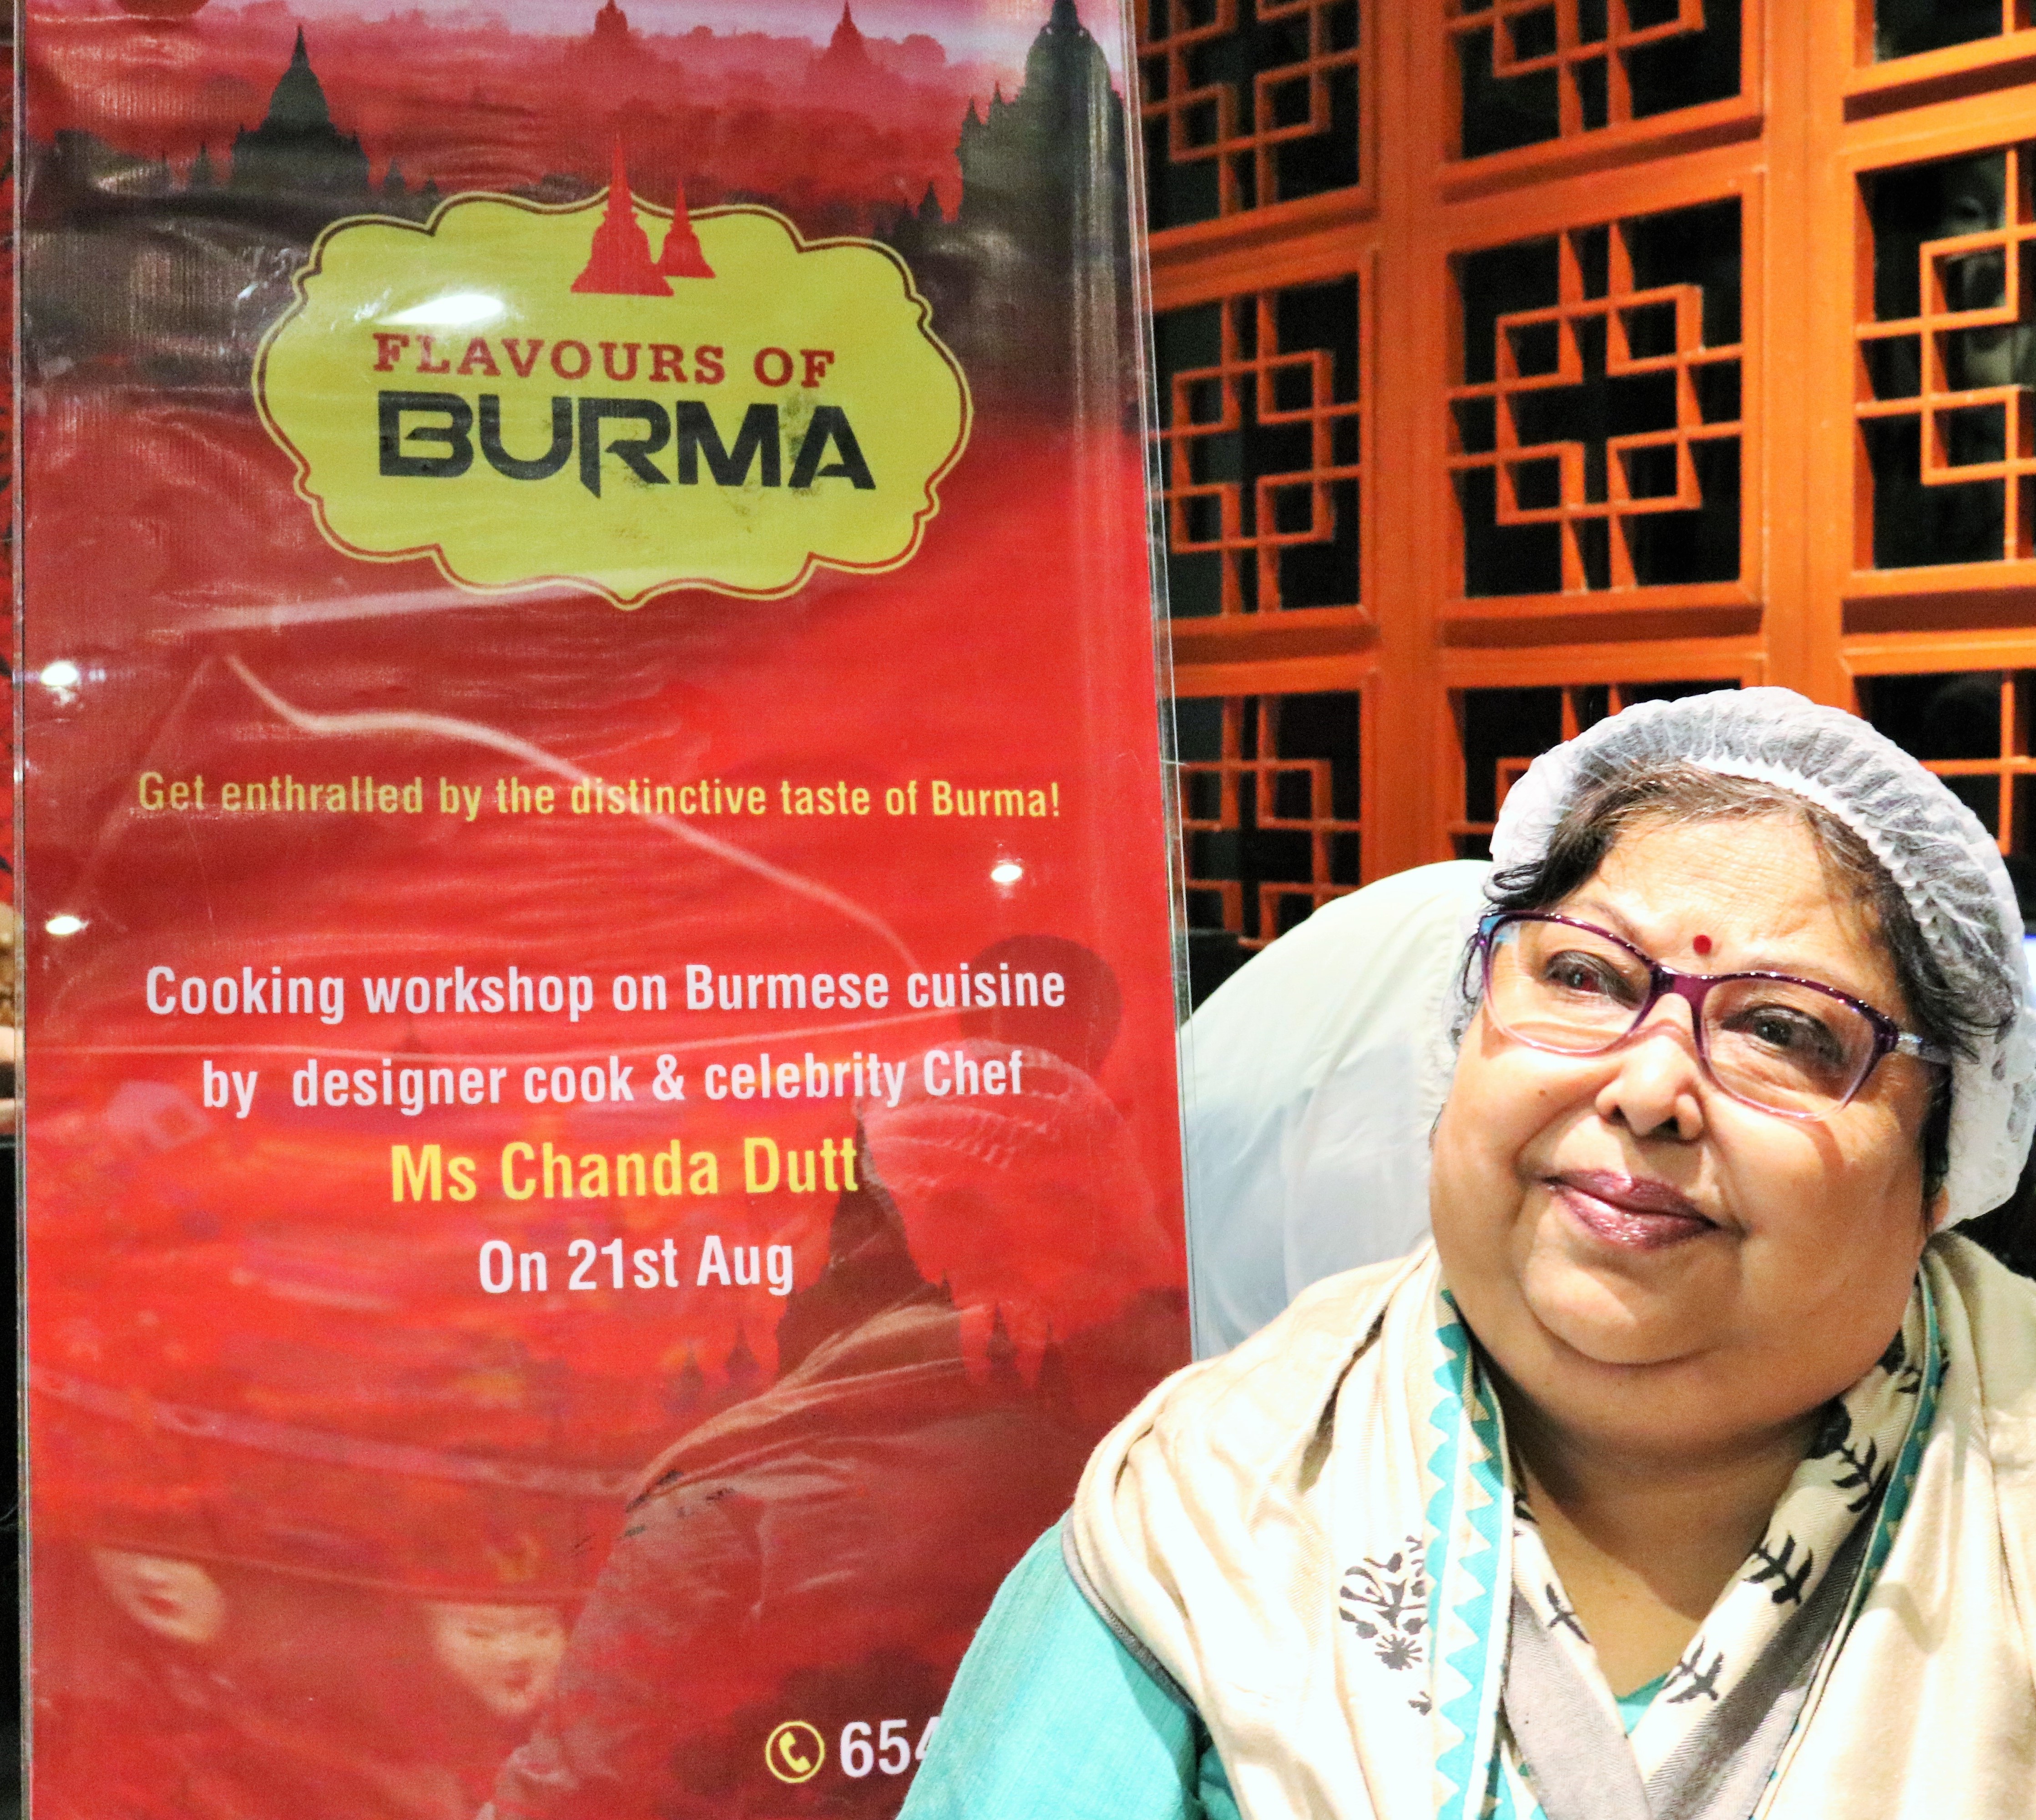 Flavors of Burma Workshop